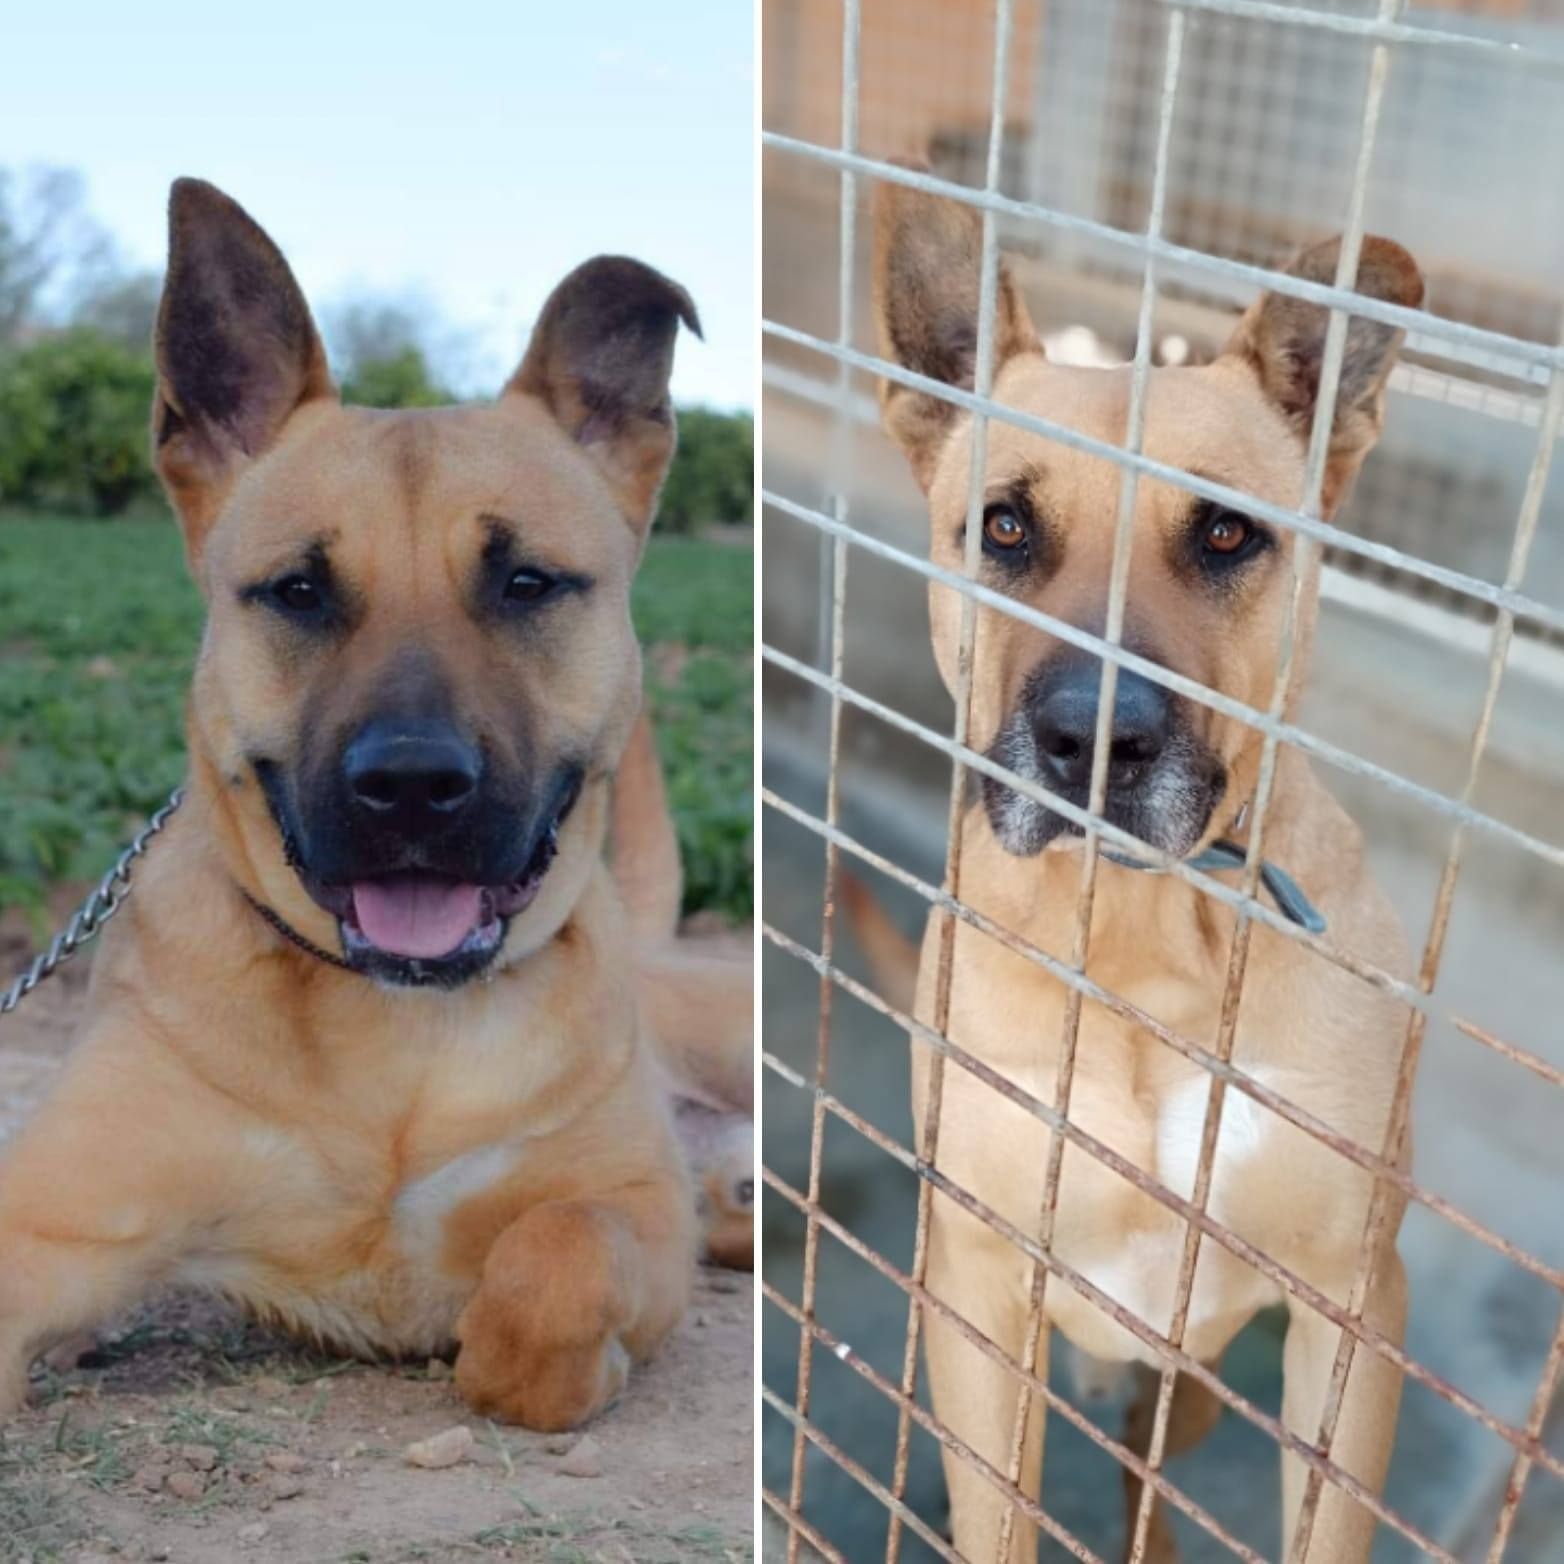 Perros de razas PPP abandonados que esperan adopcion